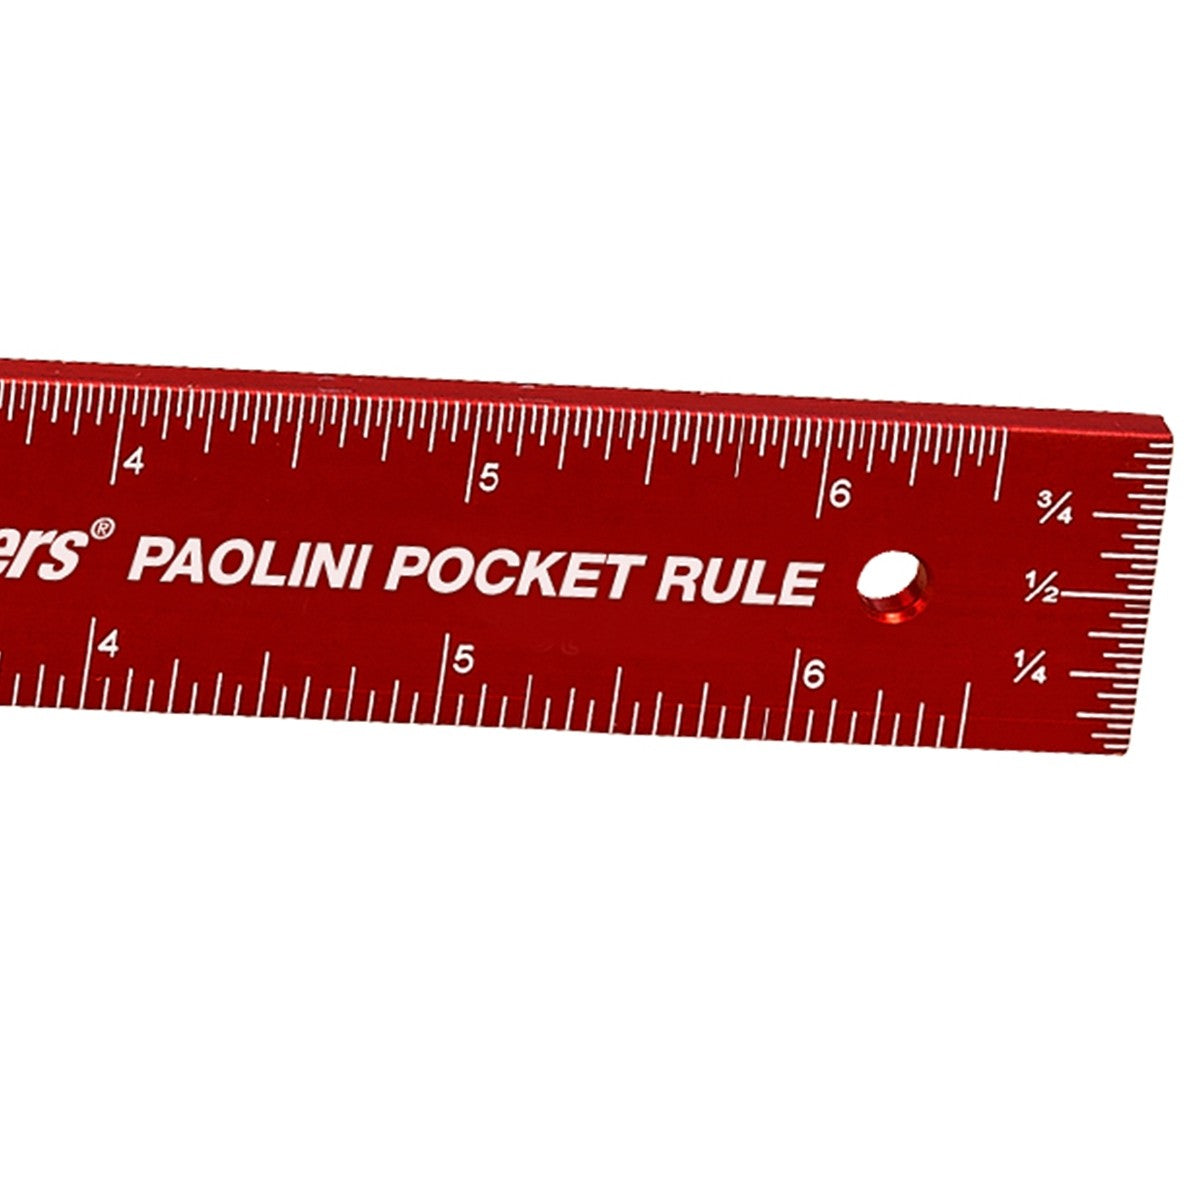 Paolini Pocket Rules